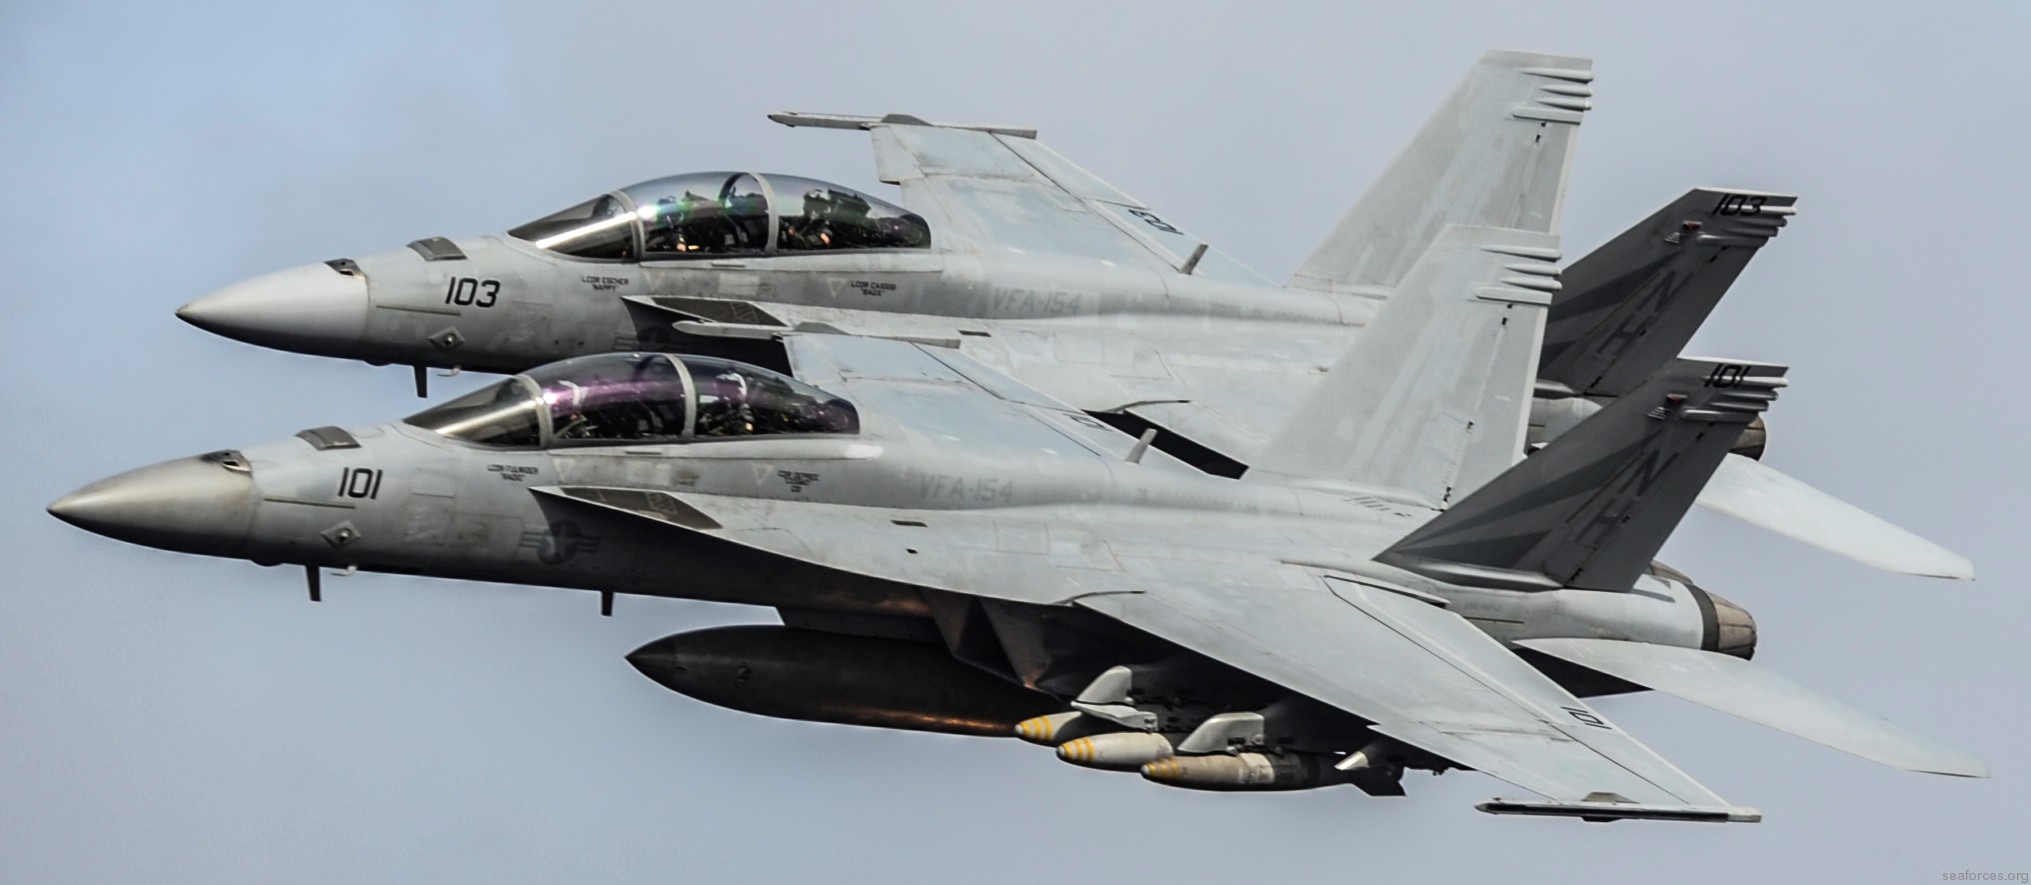 vfa-154 black knights strike fighter squadron navy f/a-18f super hornet carrier air wing cvw-11 uss nimitz cvn-68 22